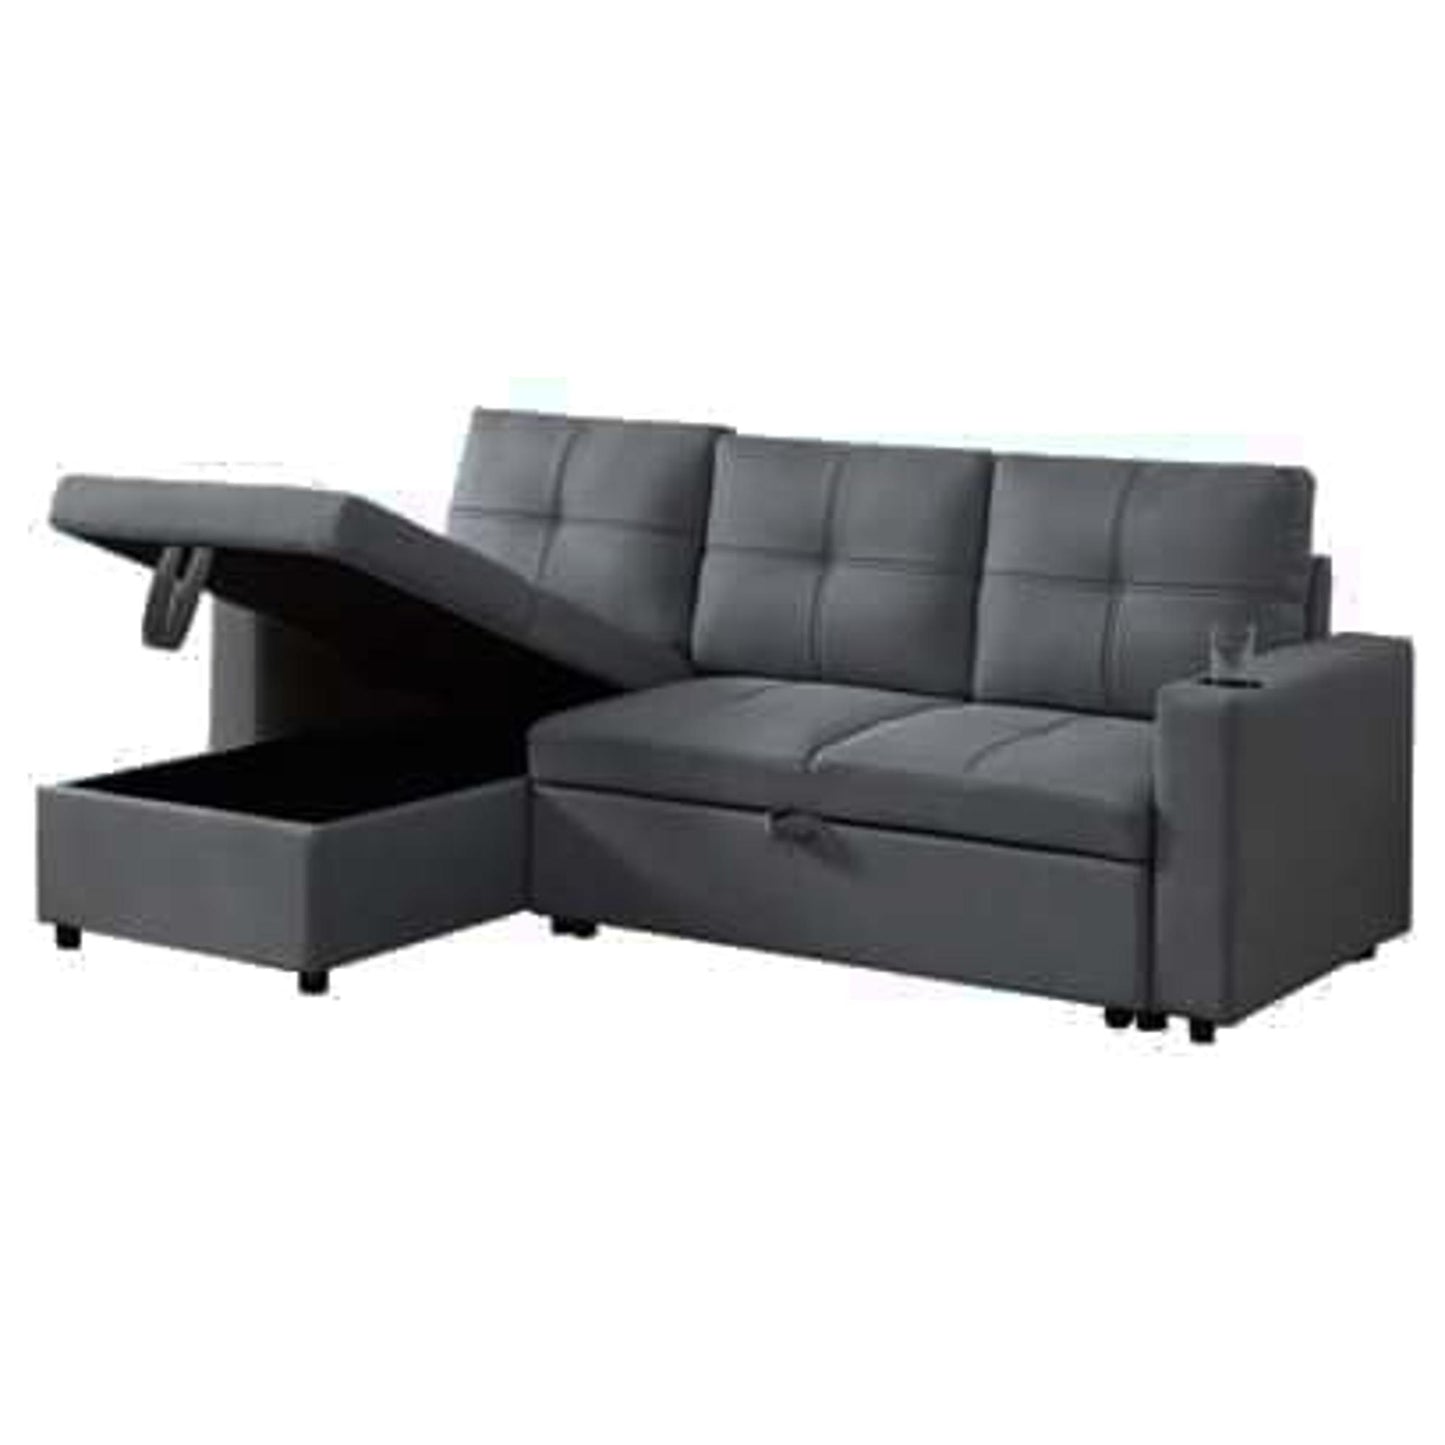 Divergent Sectional Sleeper Sofa in Dark Gray